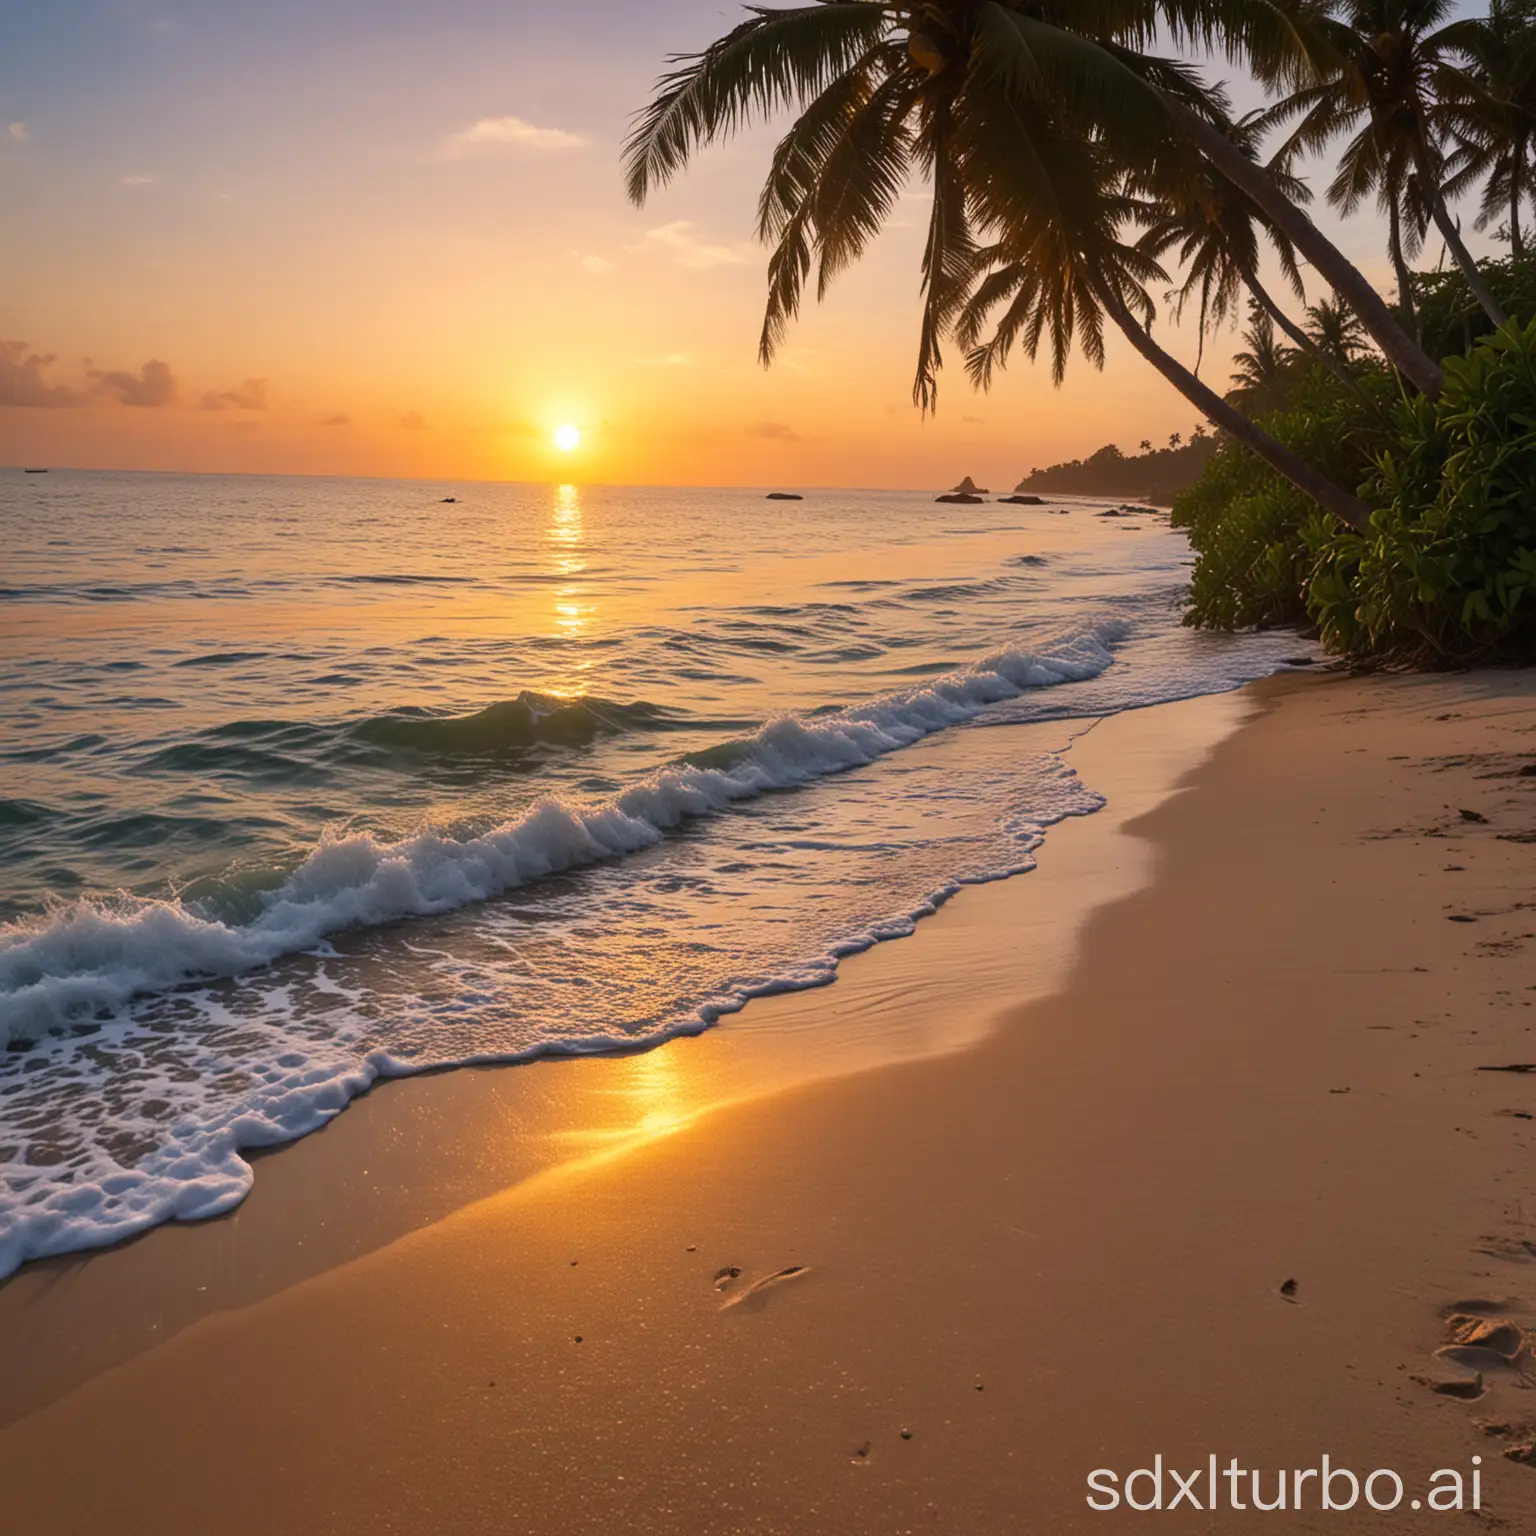 Sunrise from the sea, sandy beach, coconut palms